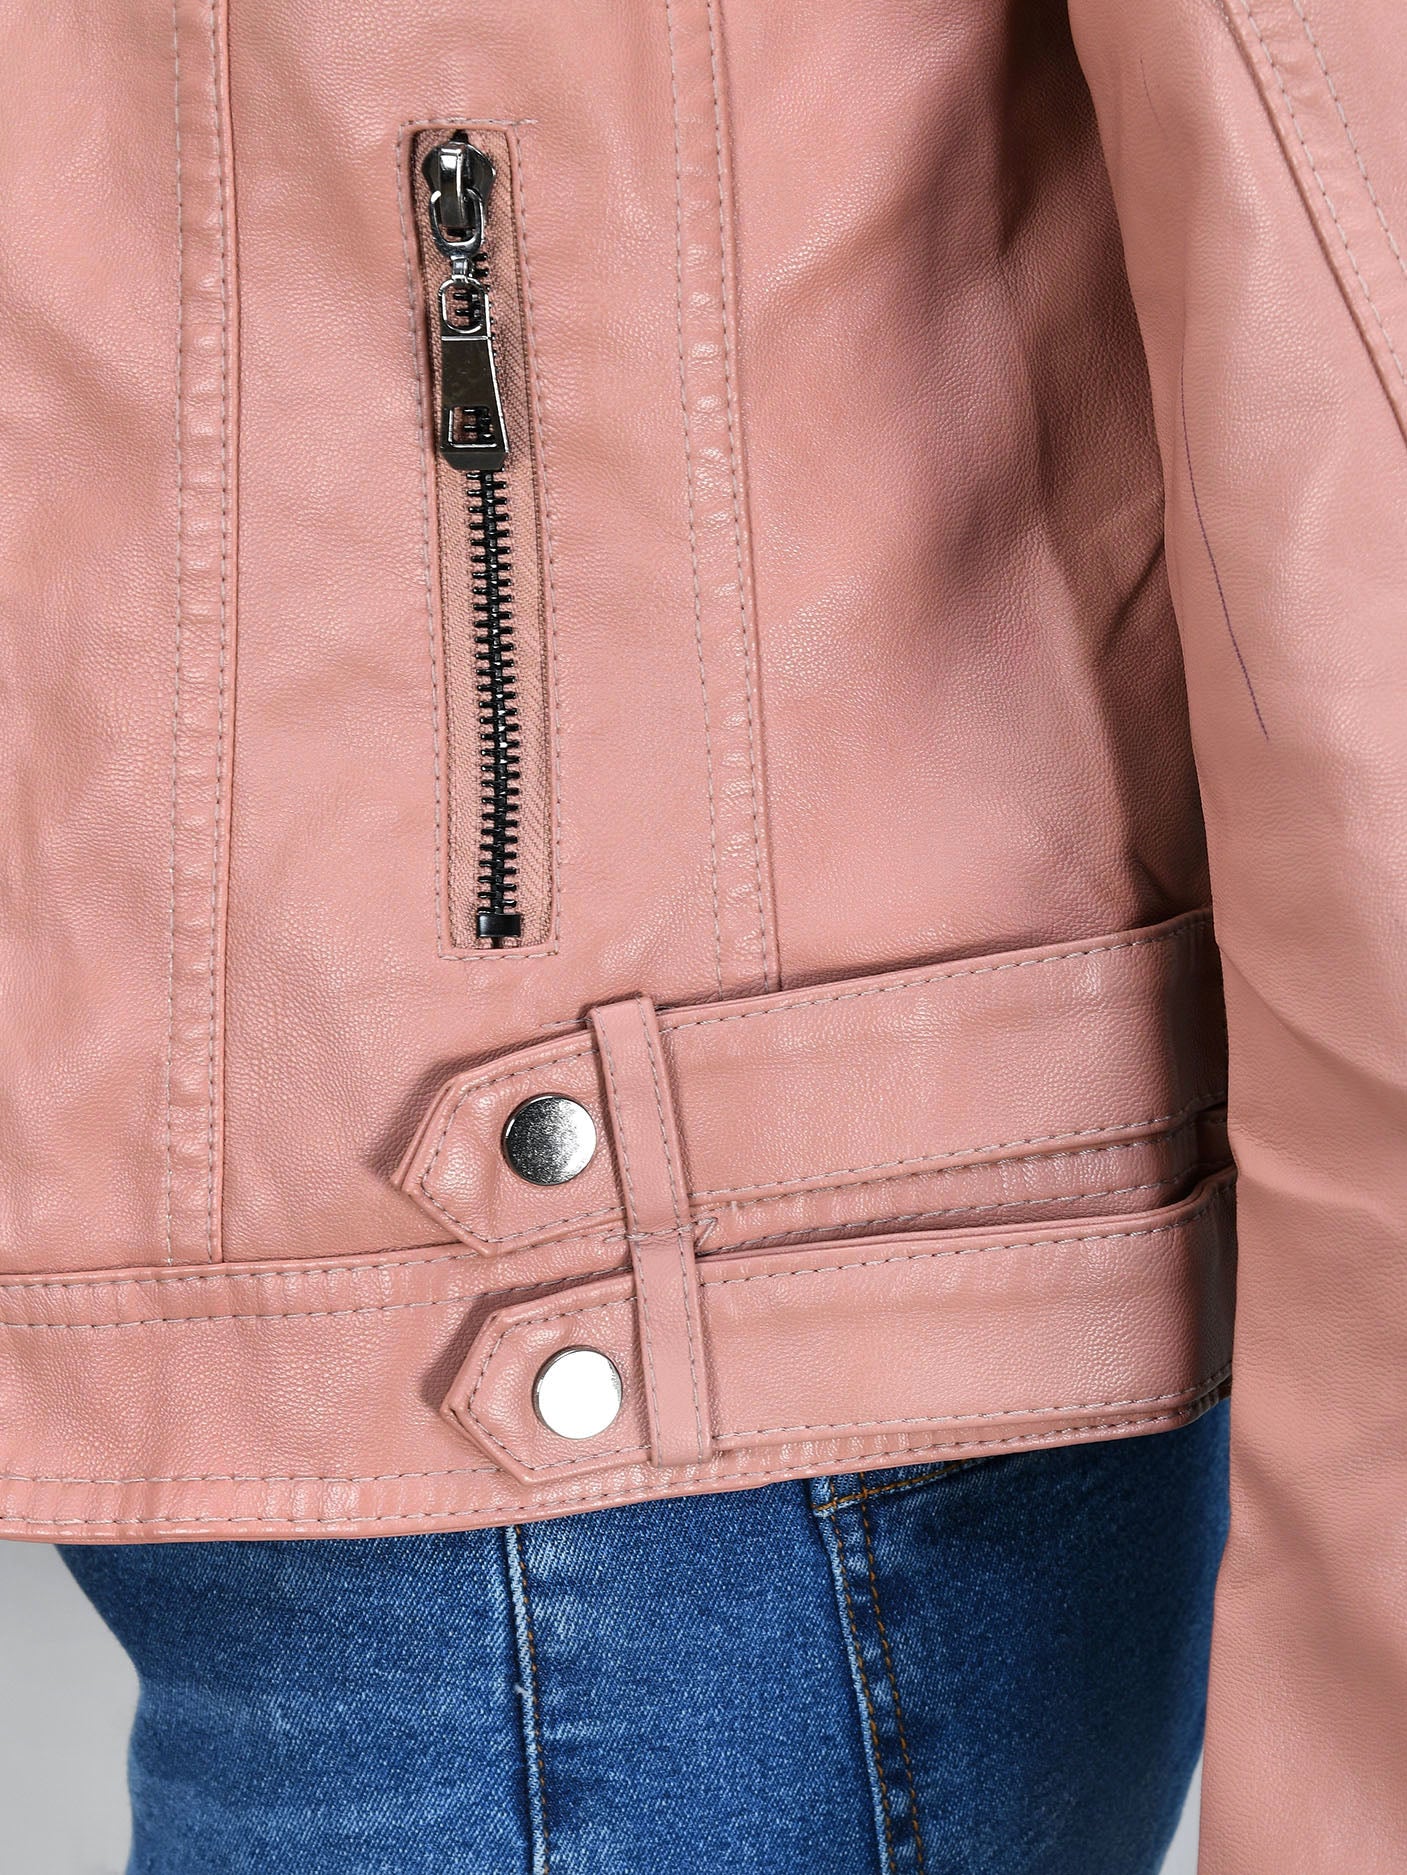 Iconic Leather Jacket - Pink